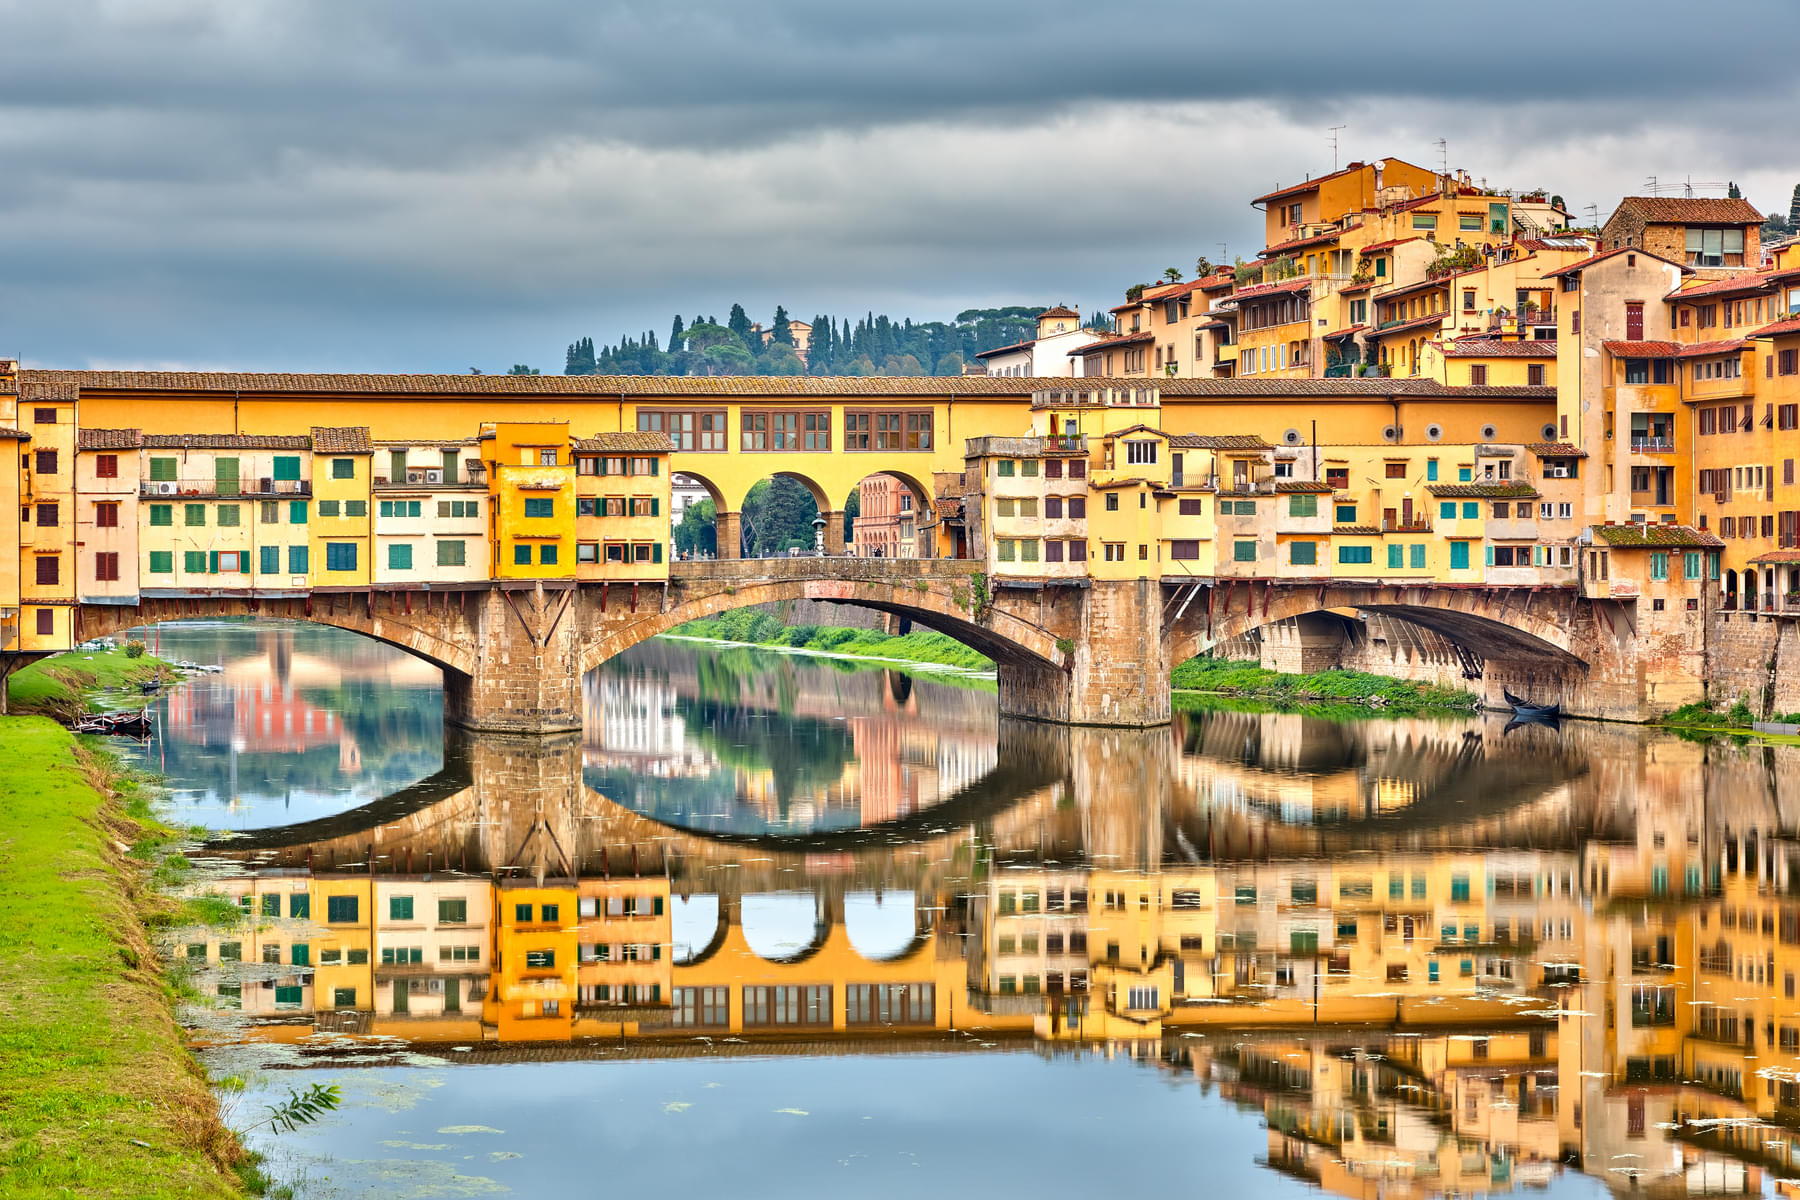 Hitler Prevented The Destruction Of The Ponte Vecchio In World War II